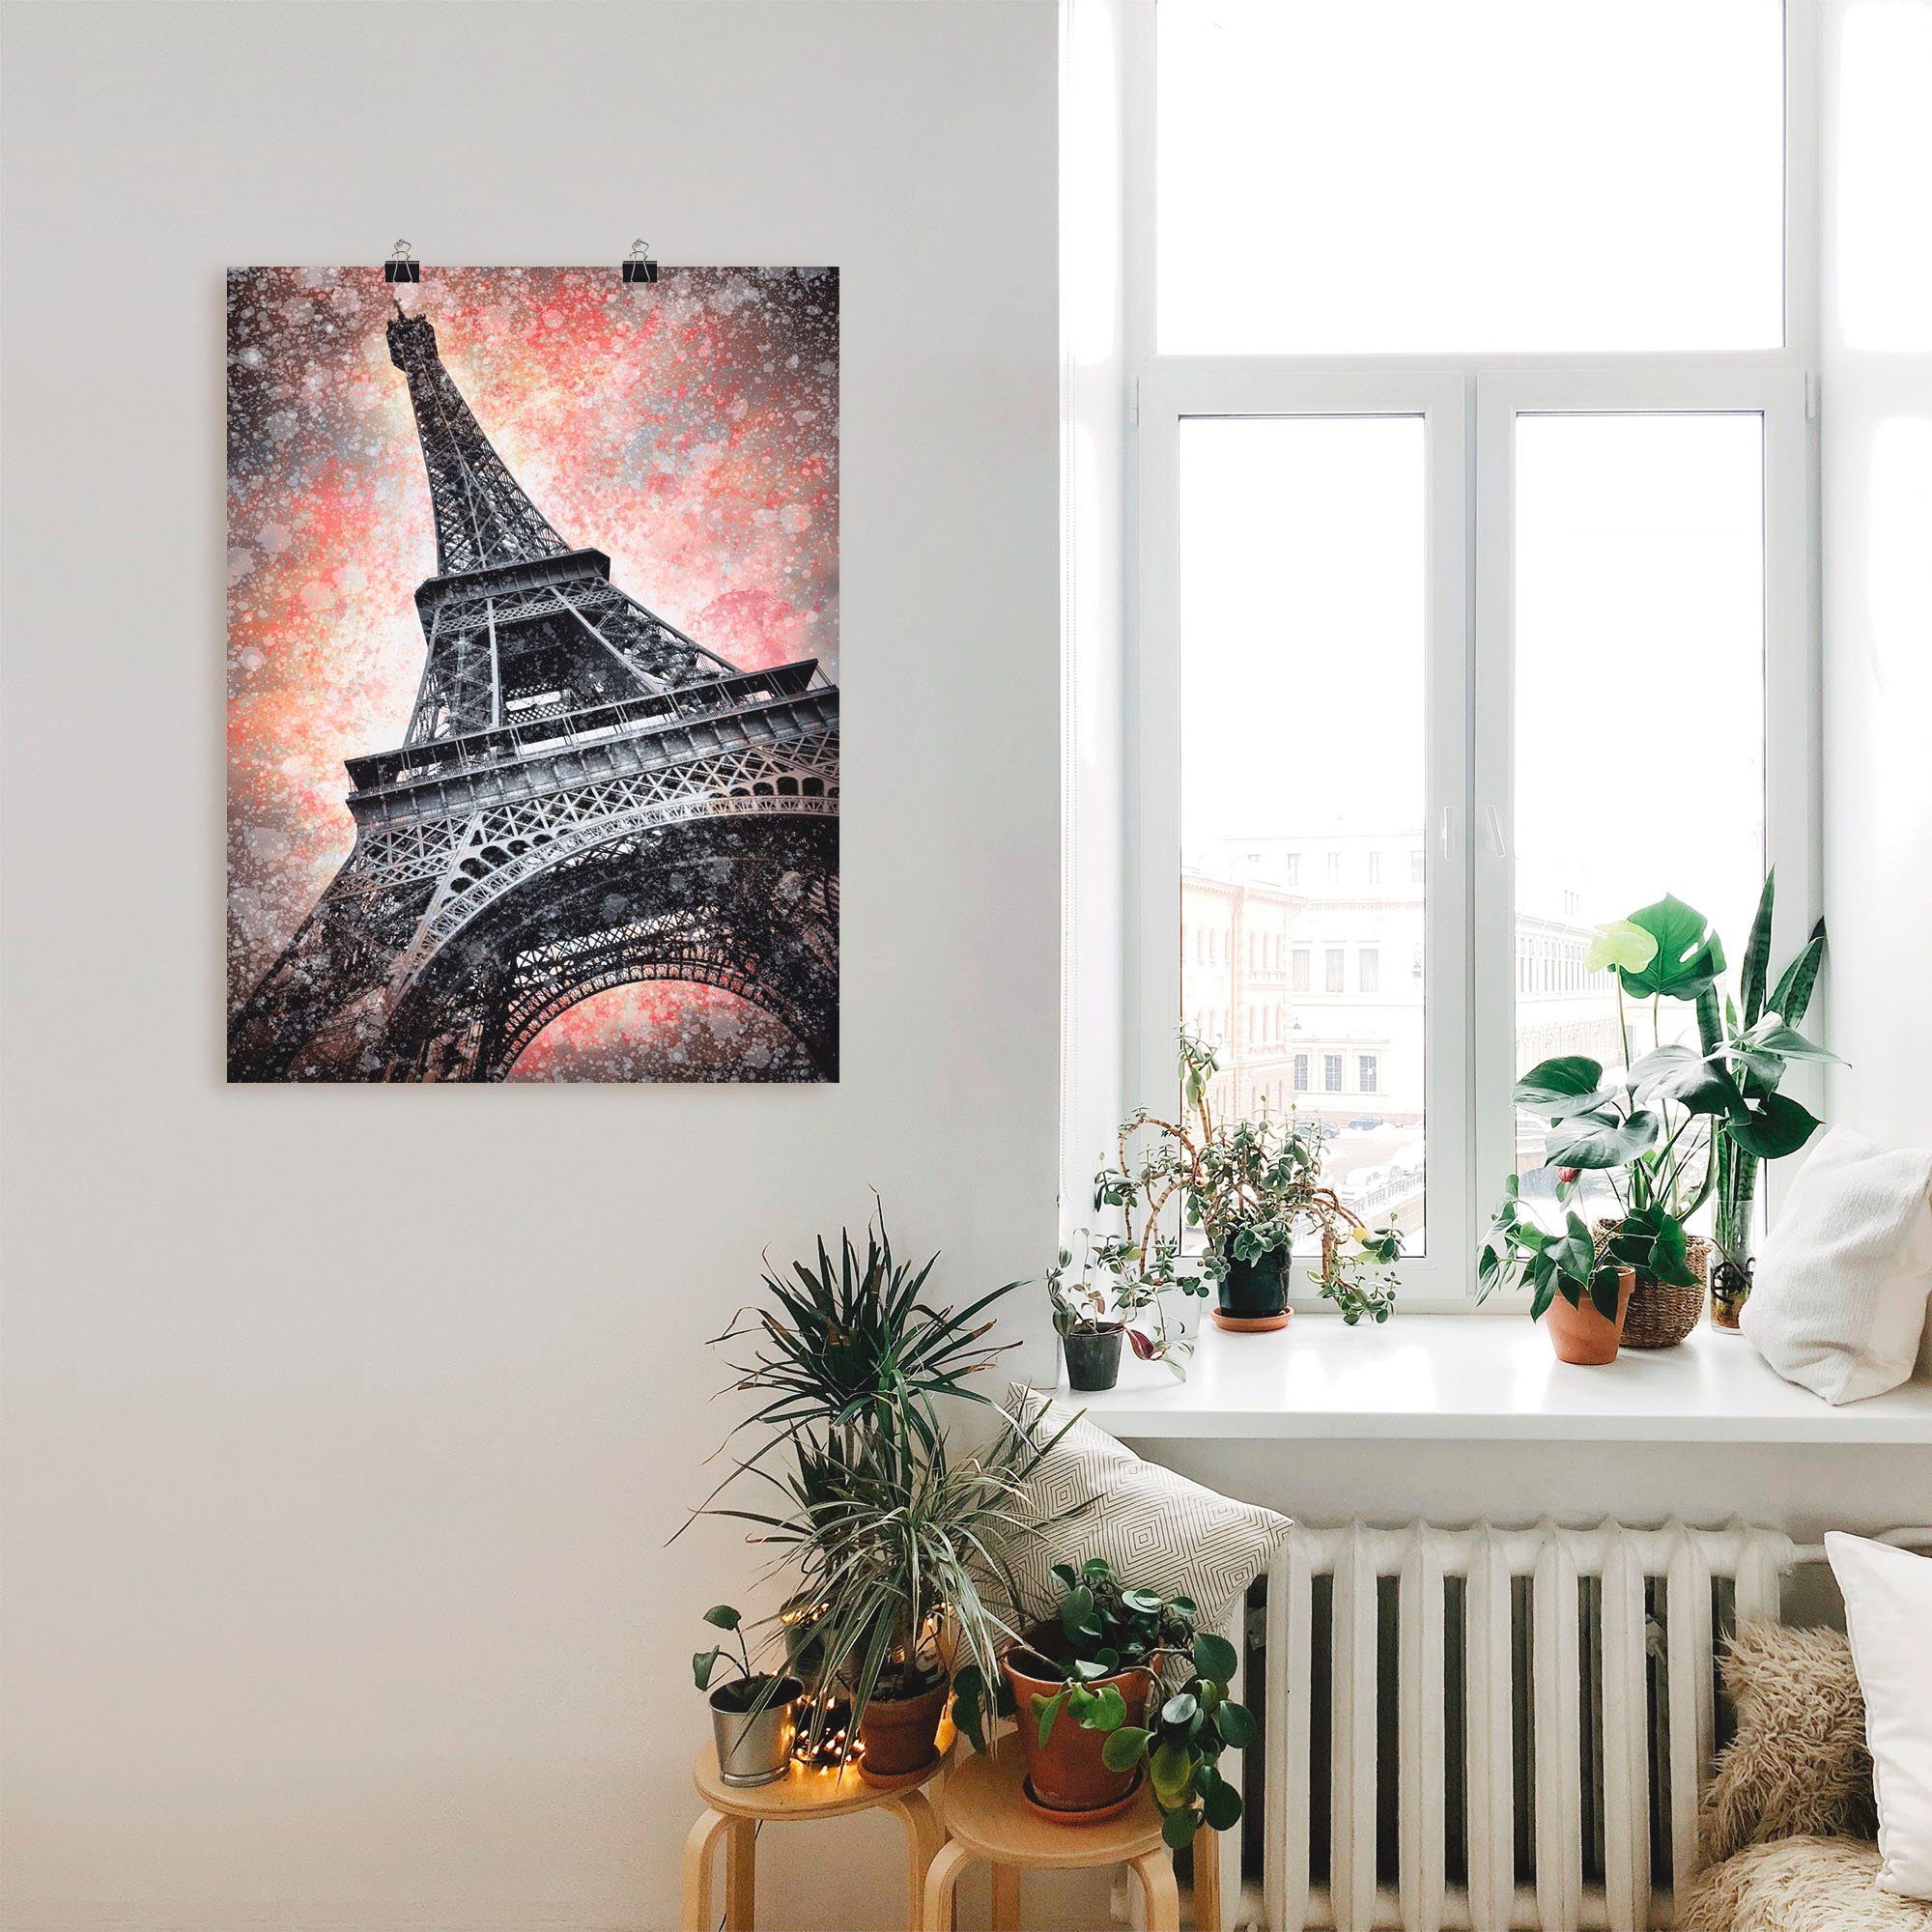 Artland Artprint Modern Art Eiffeltoren in vele afmetingen & productsoorten - artprint aluminium / artprint buiten, artprint op linnen, poster, muursticker / ook geschikt voor de badkamer online kopen | OTTO